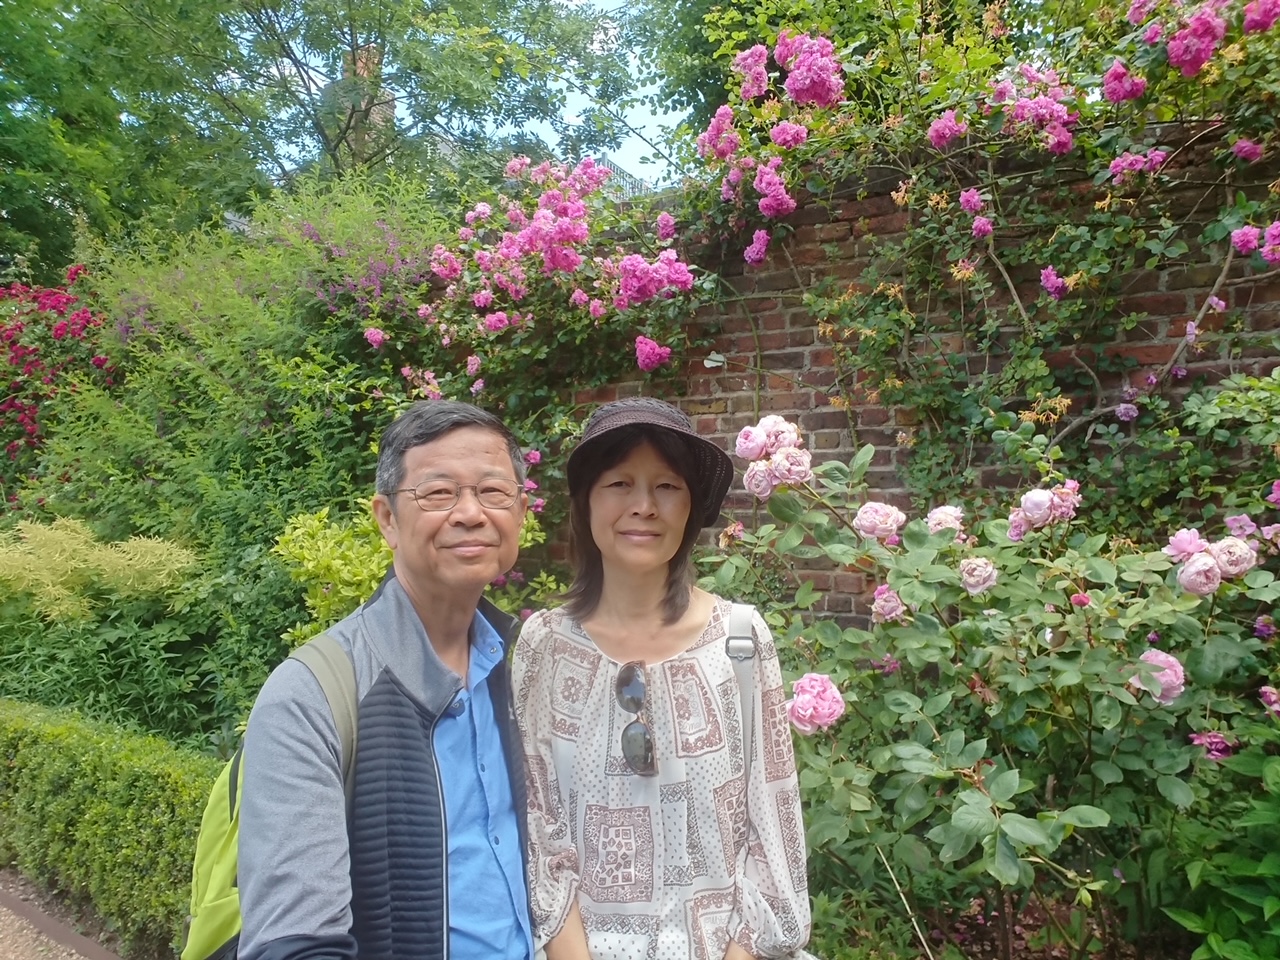 Chung-Cheng Kao and his wife